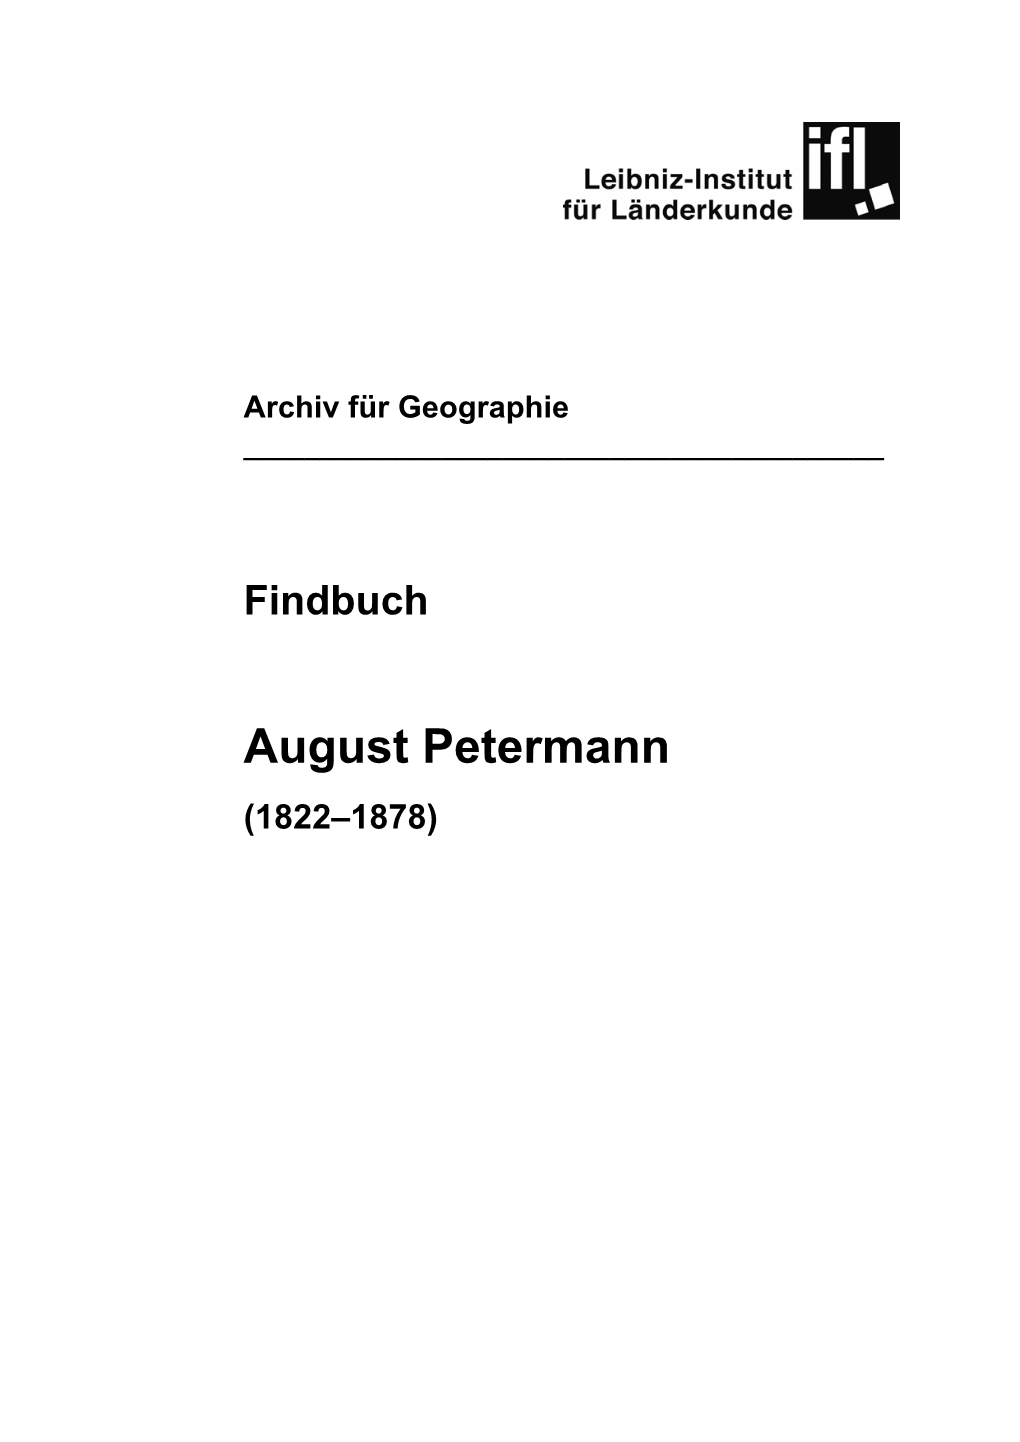 August Petermann